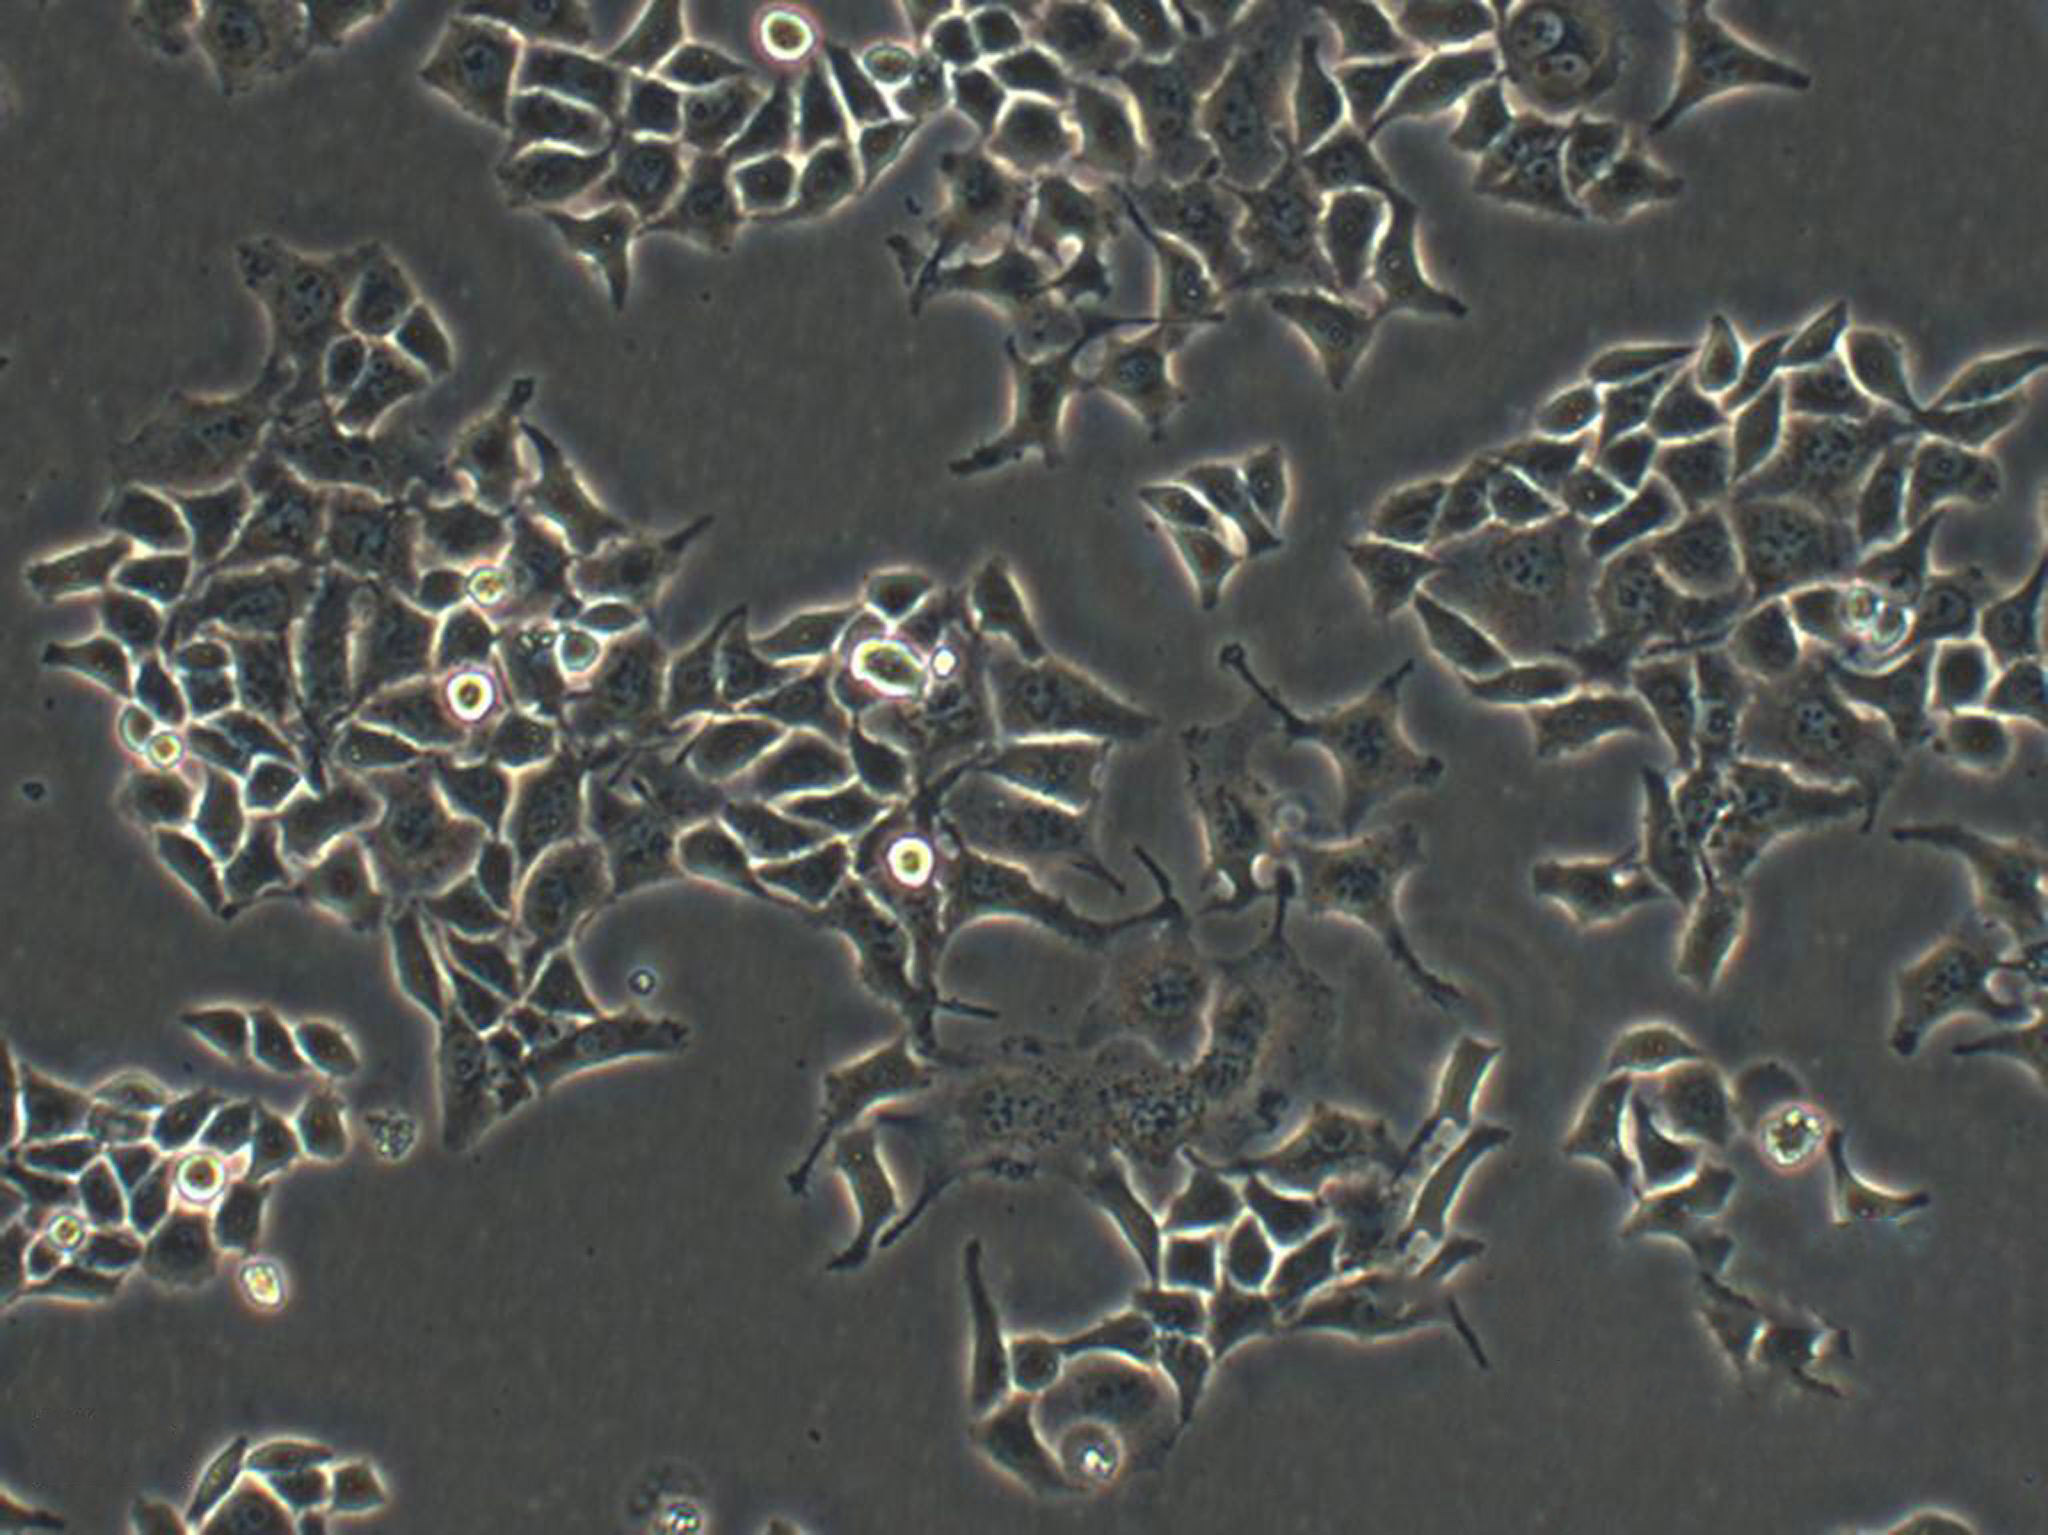 OVCA432 Adherent人卵巢癌细胞系